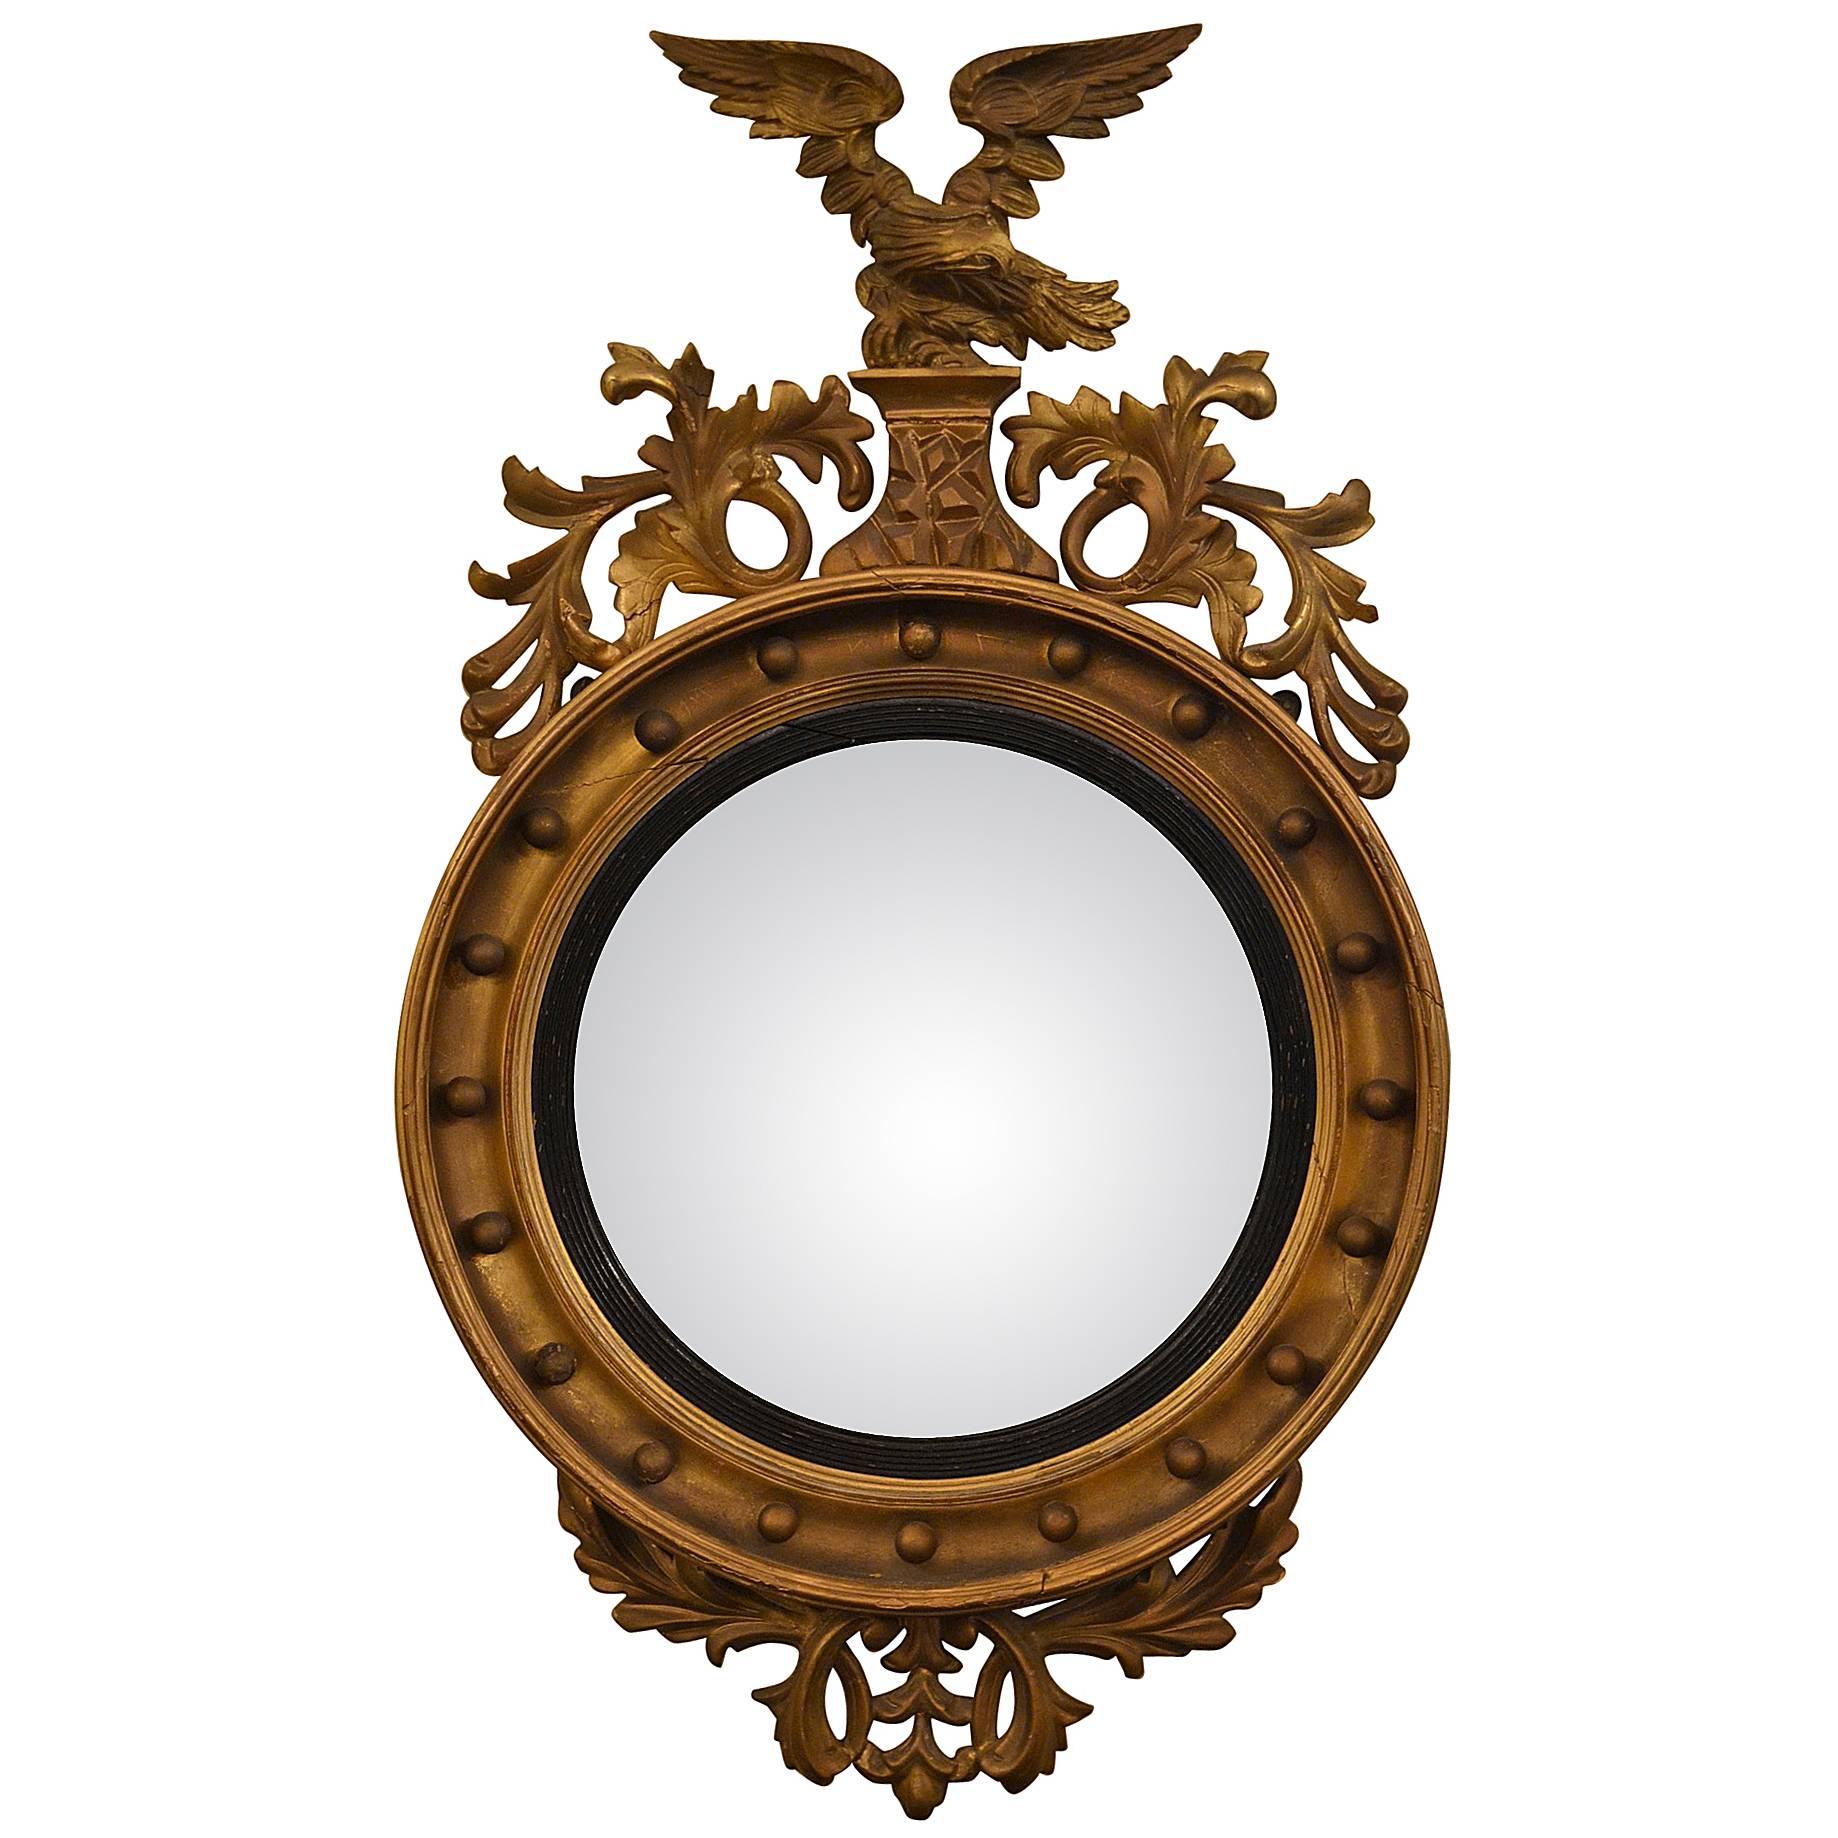 Antique English Convex Mirror, circa 1815-1830